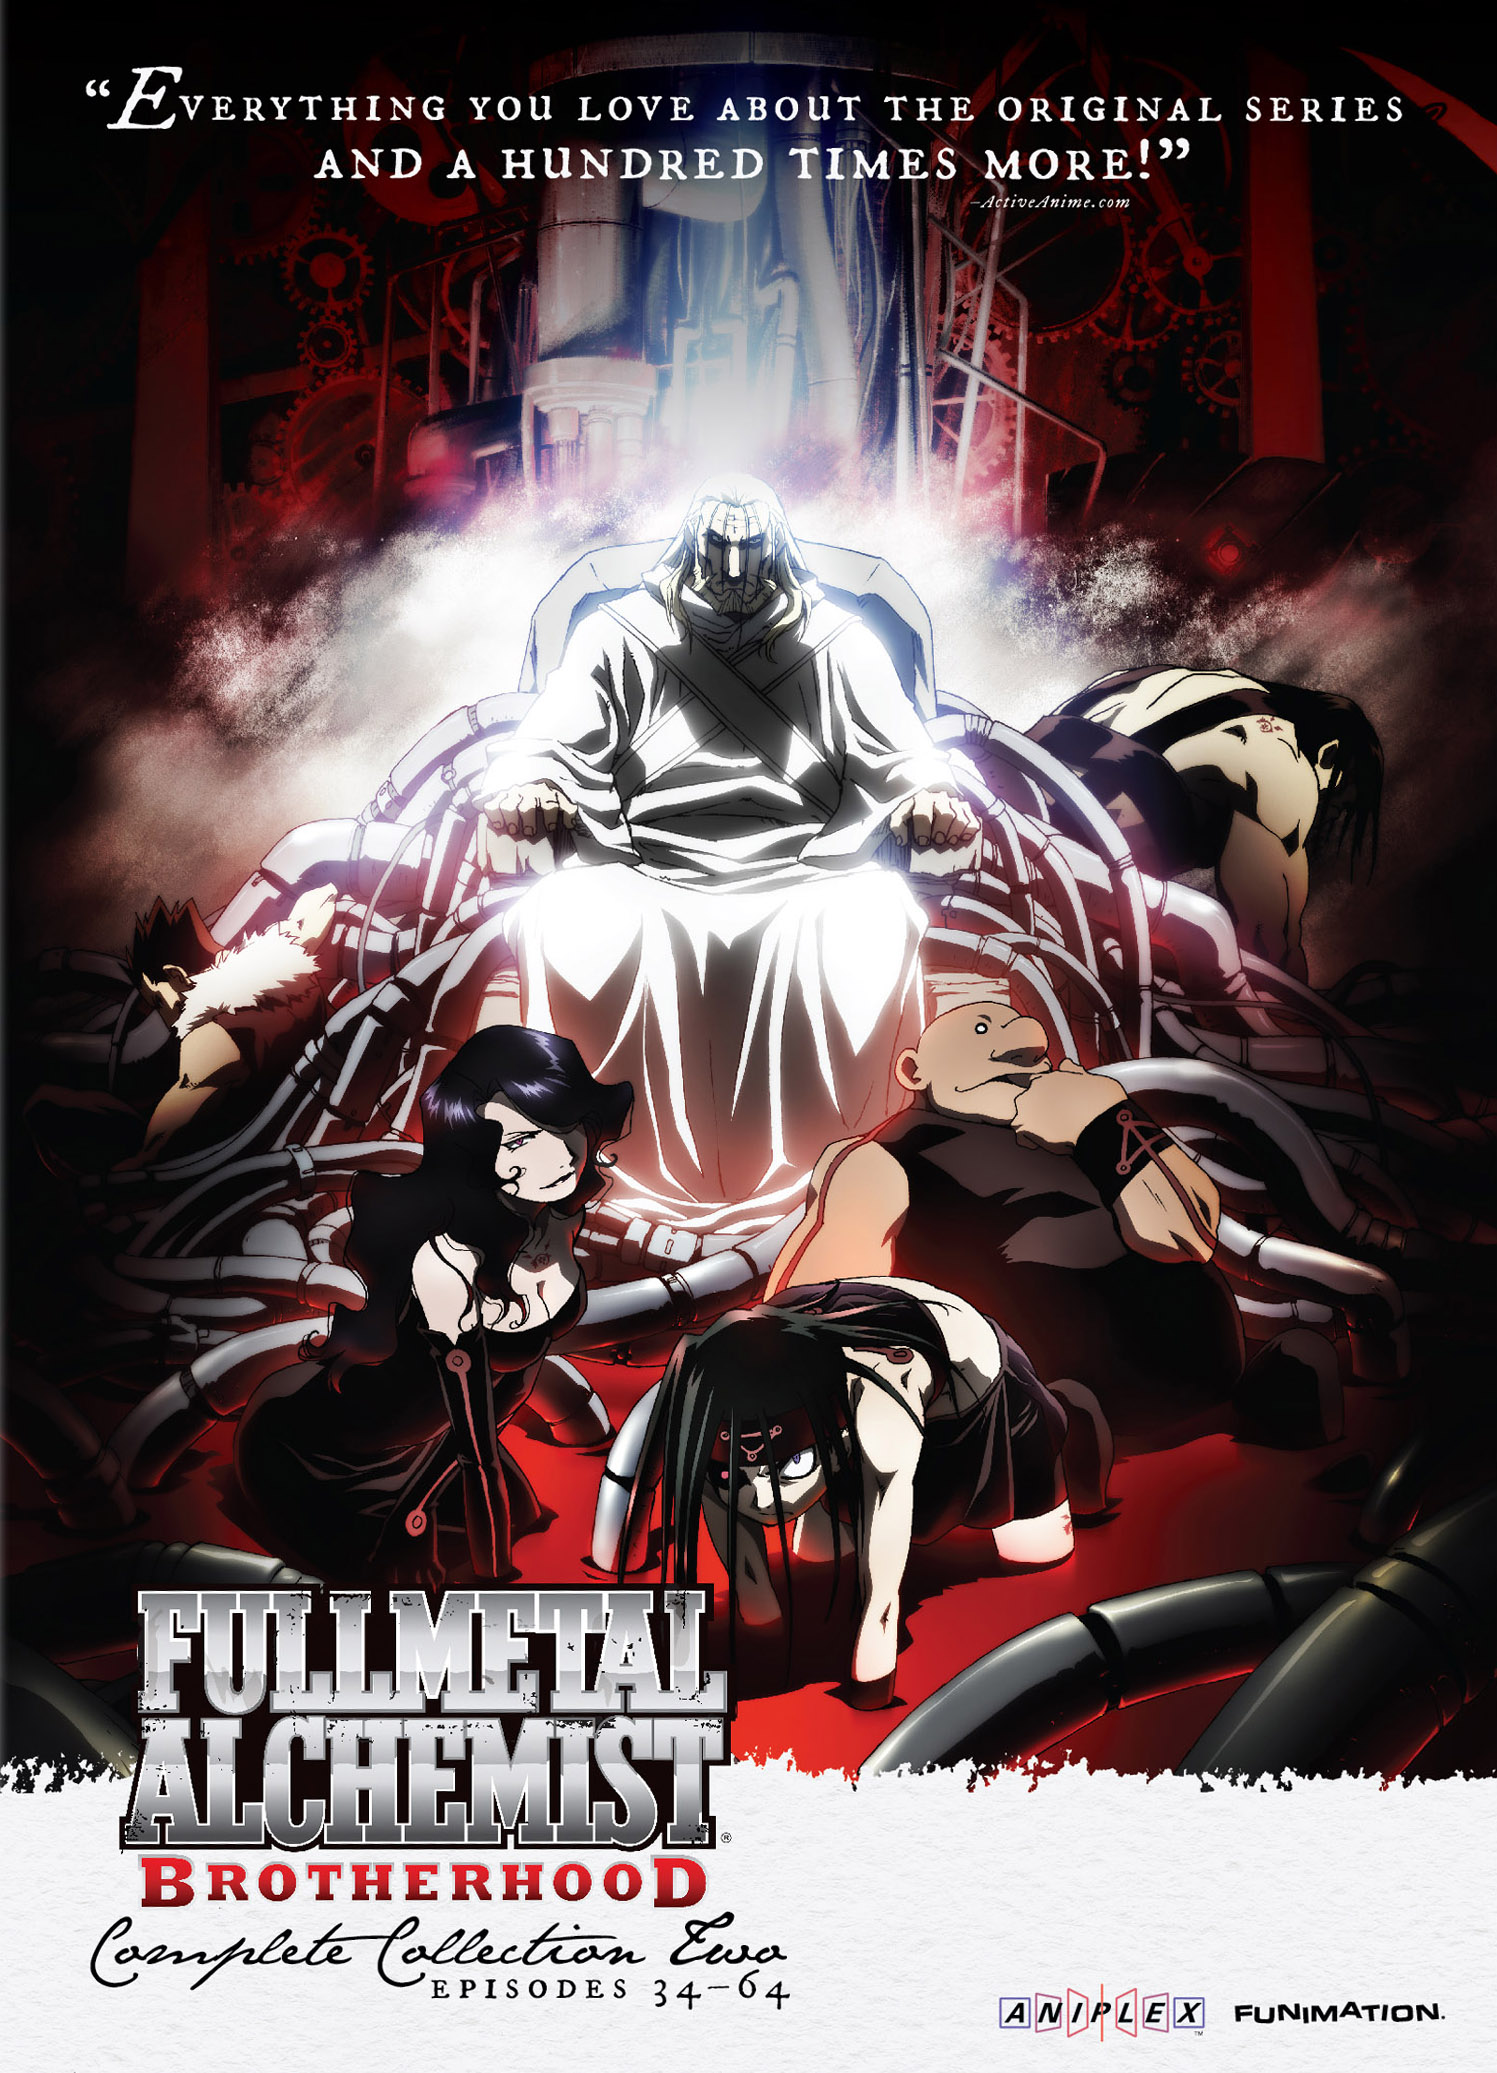 Fullmetal Alchemist Brotherhood Collection Two 5 Discs Dvd Best Buy